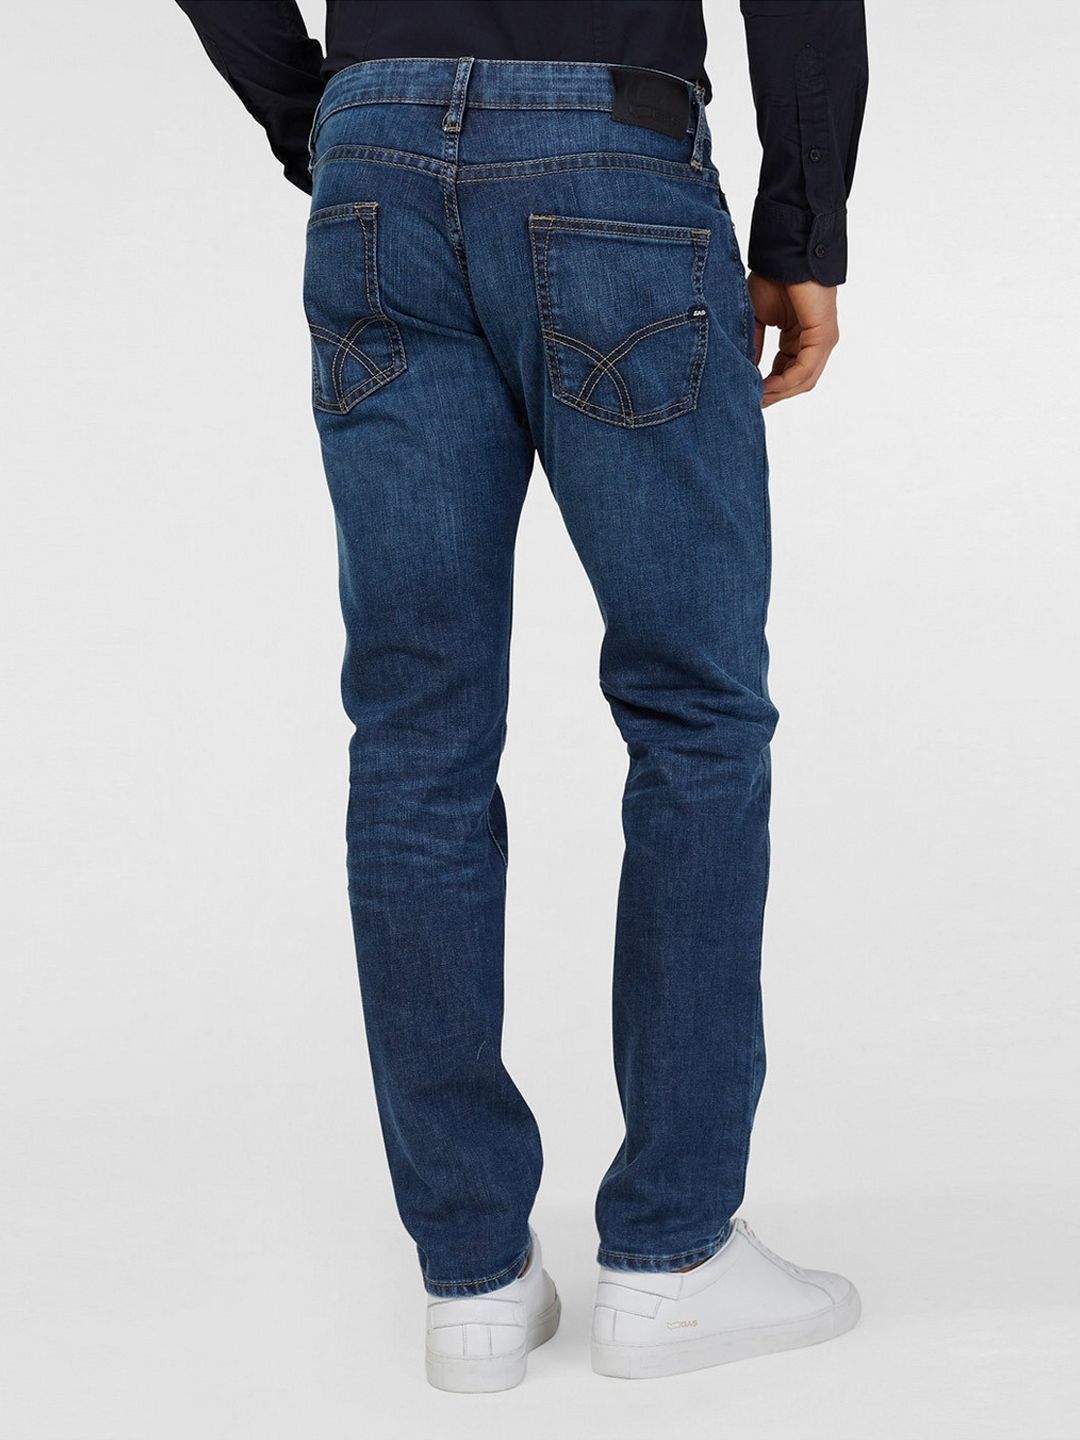 Men's Norton Carrot Fit Dark Blue Jeans